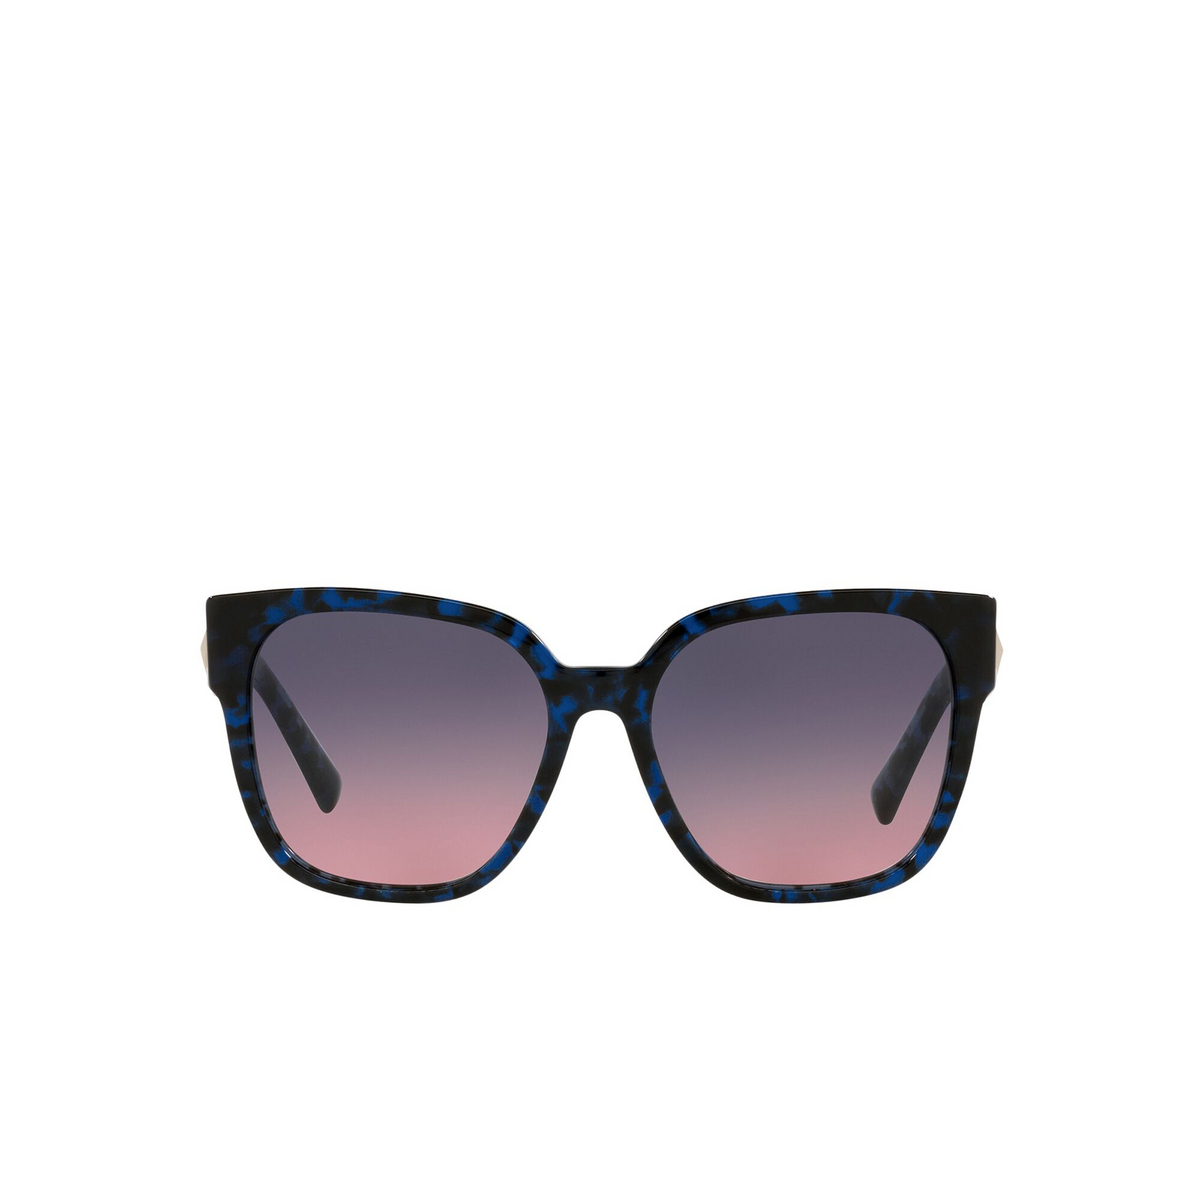 Valentino® Square Sunglasses: VA4111 color Blue Havana 5031I6 - front view.